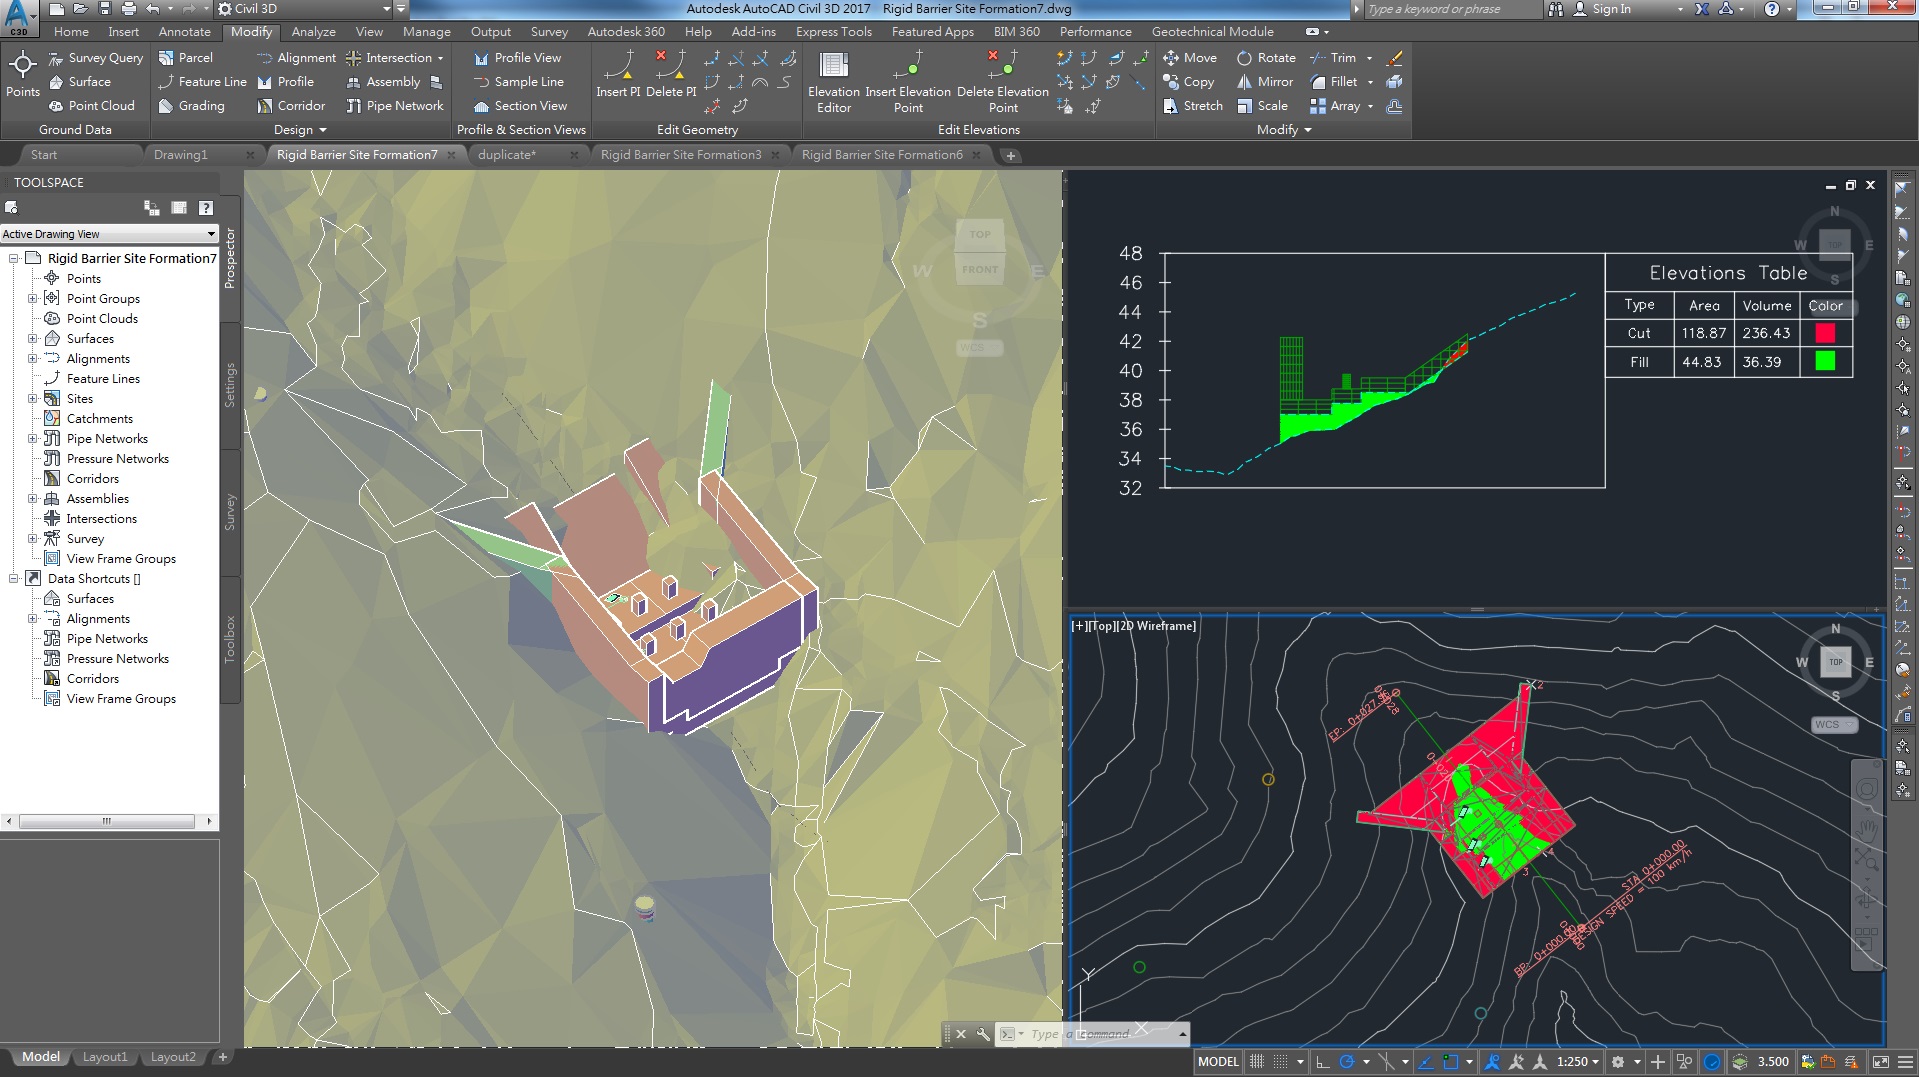 3D Building Information Modelling (BIM) for Shek Pai Wan Road project